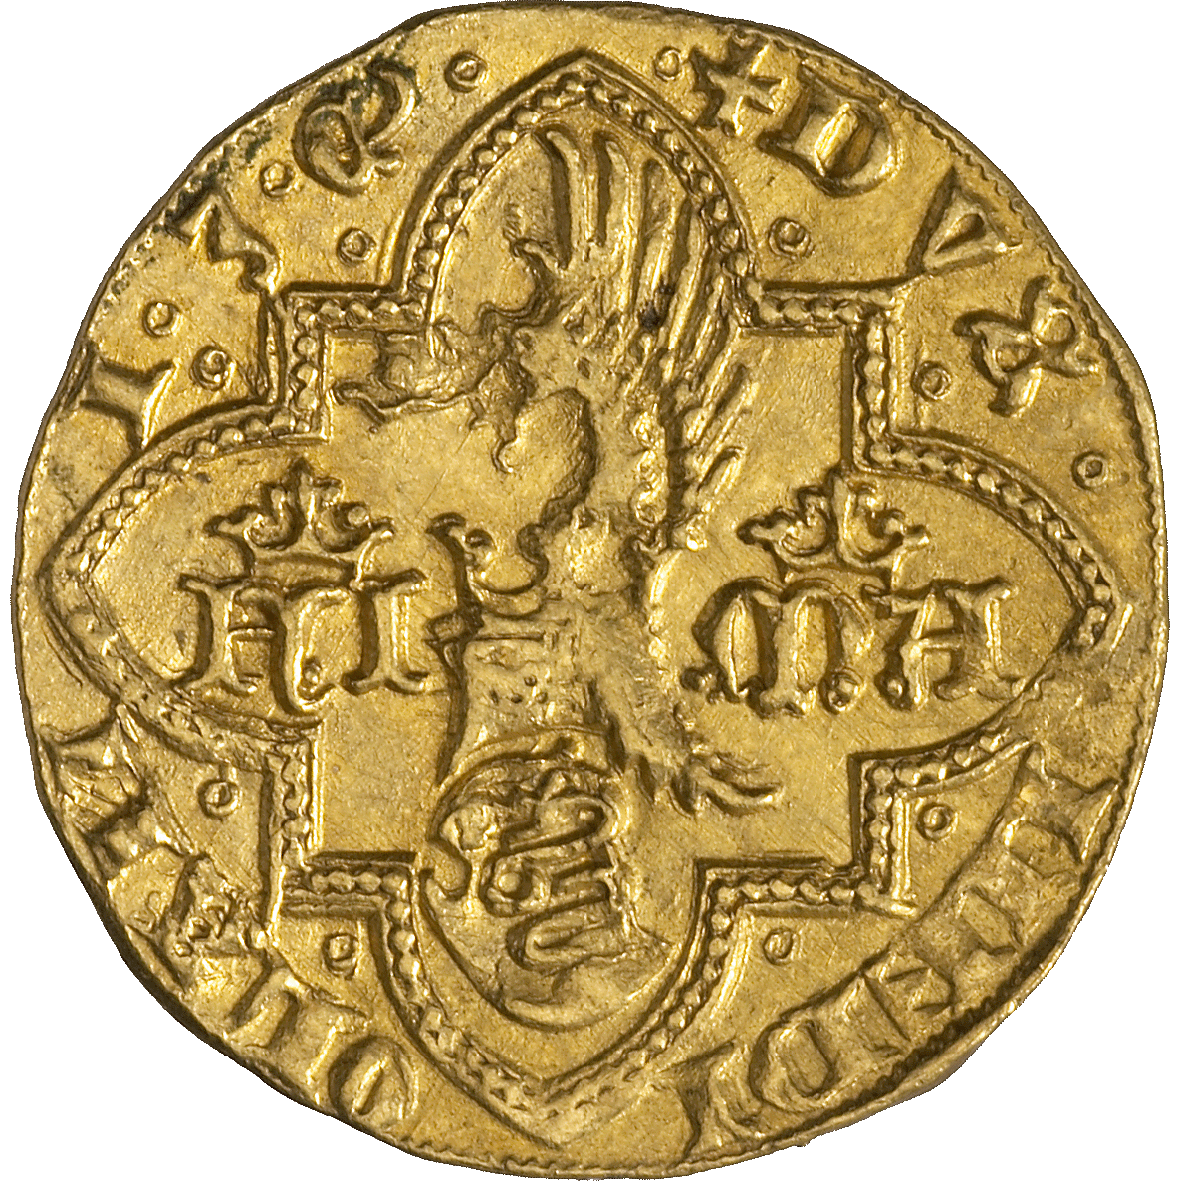 Herzogtum Mailand, Filippo Maria Visconti, Fiorino d'oro (reverse)